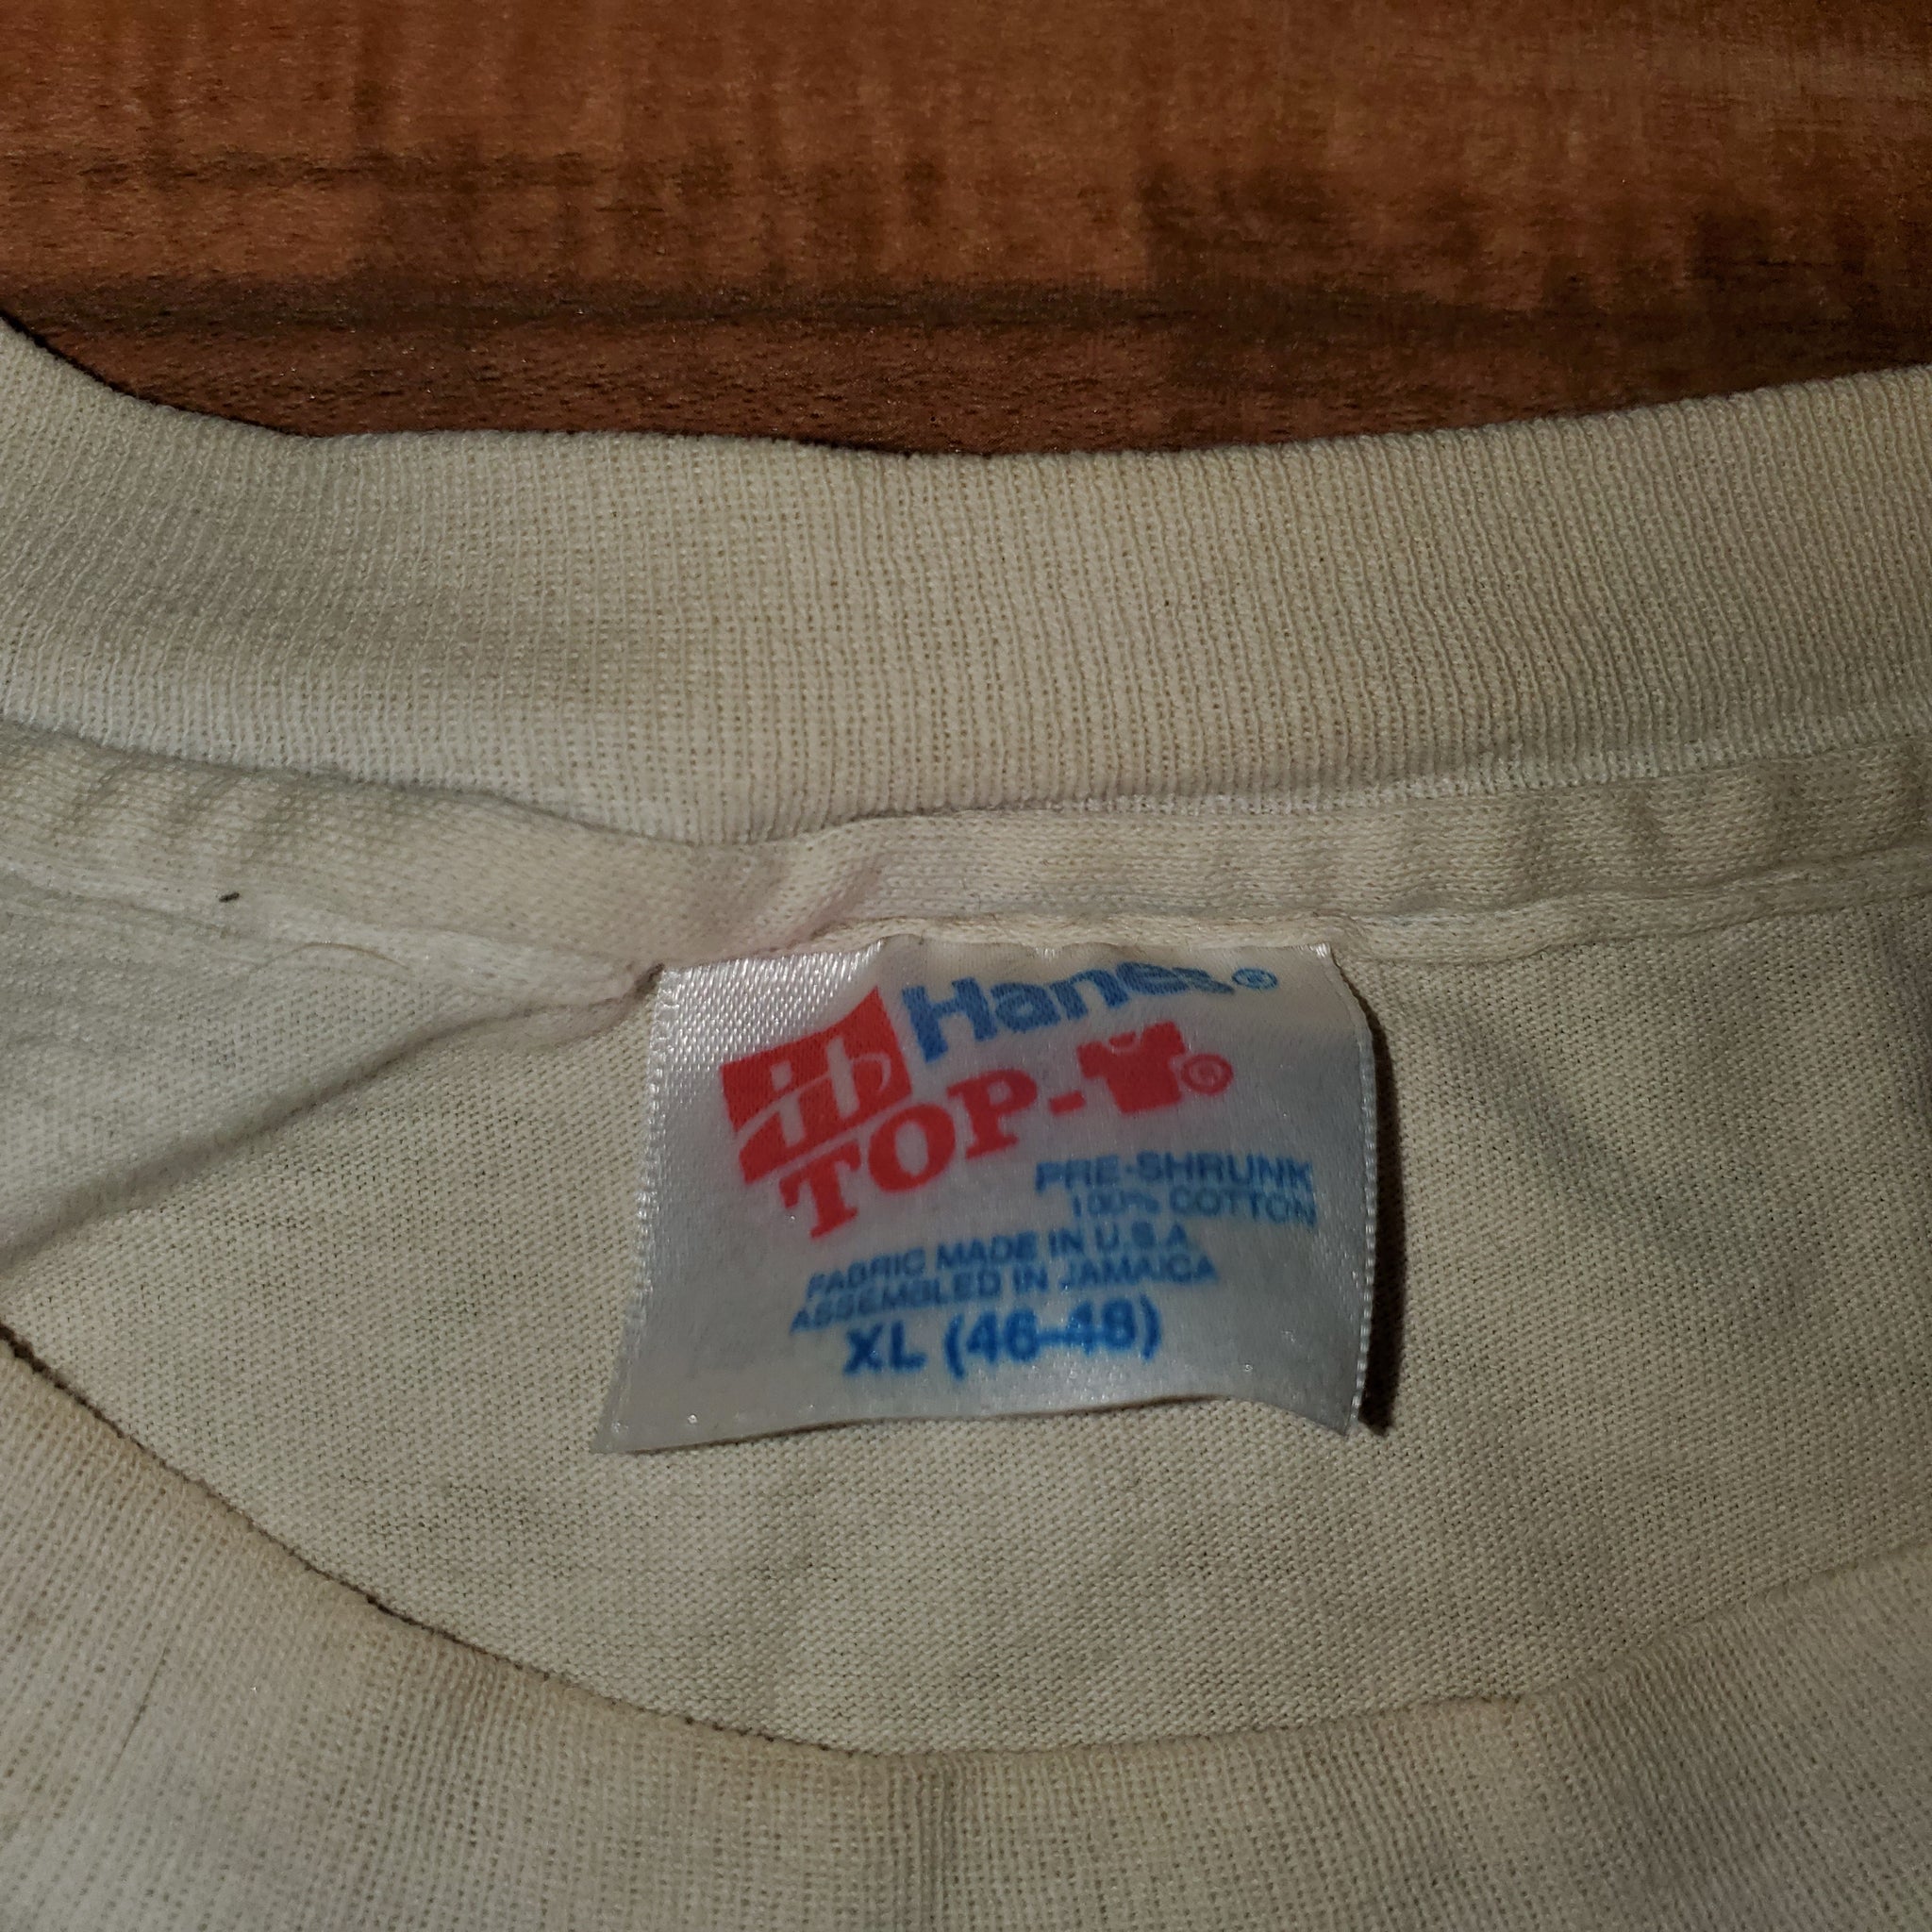 Grateful Dead 1993 Tour Lot T-Shirt. Rare back print variation